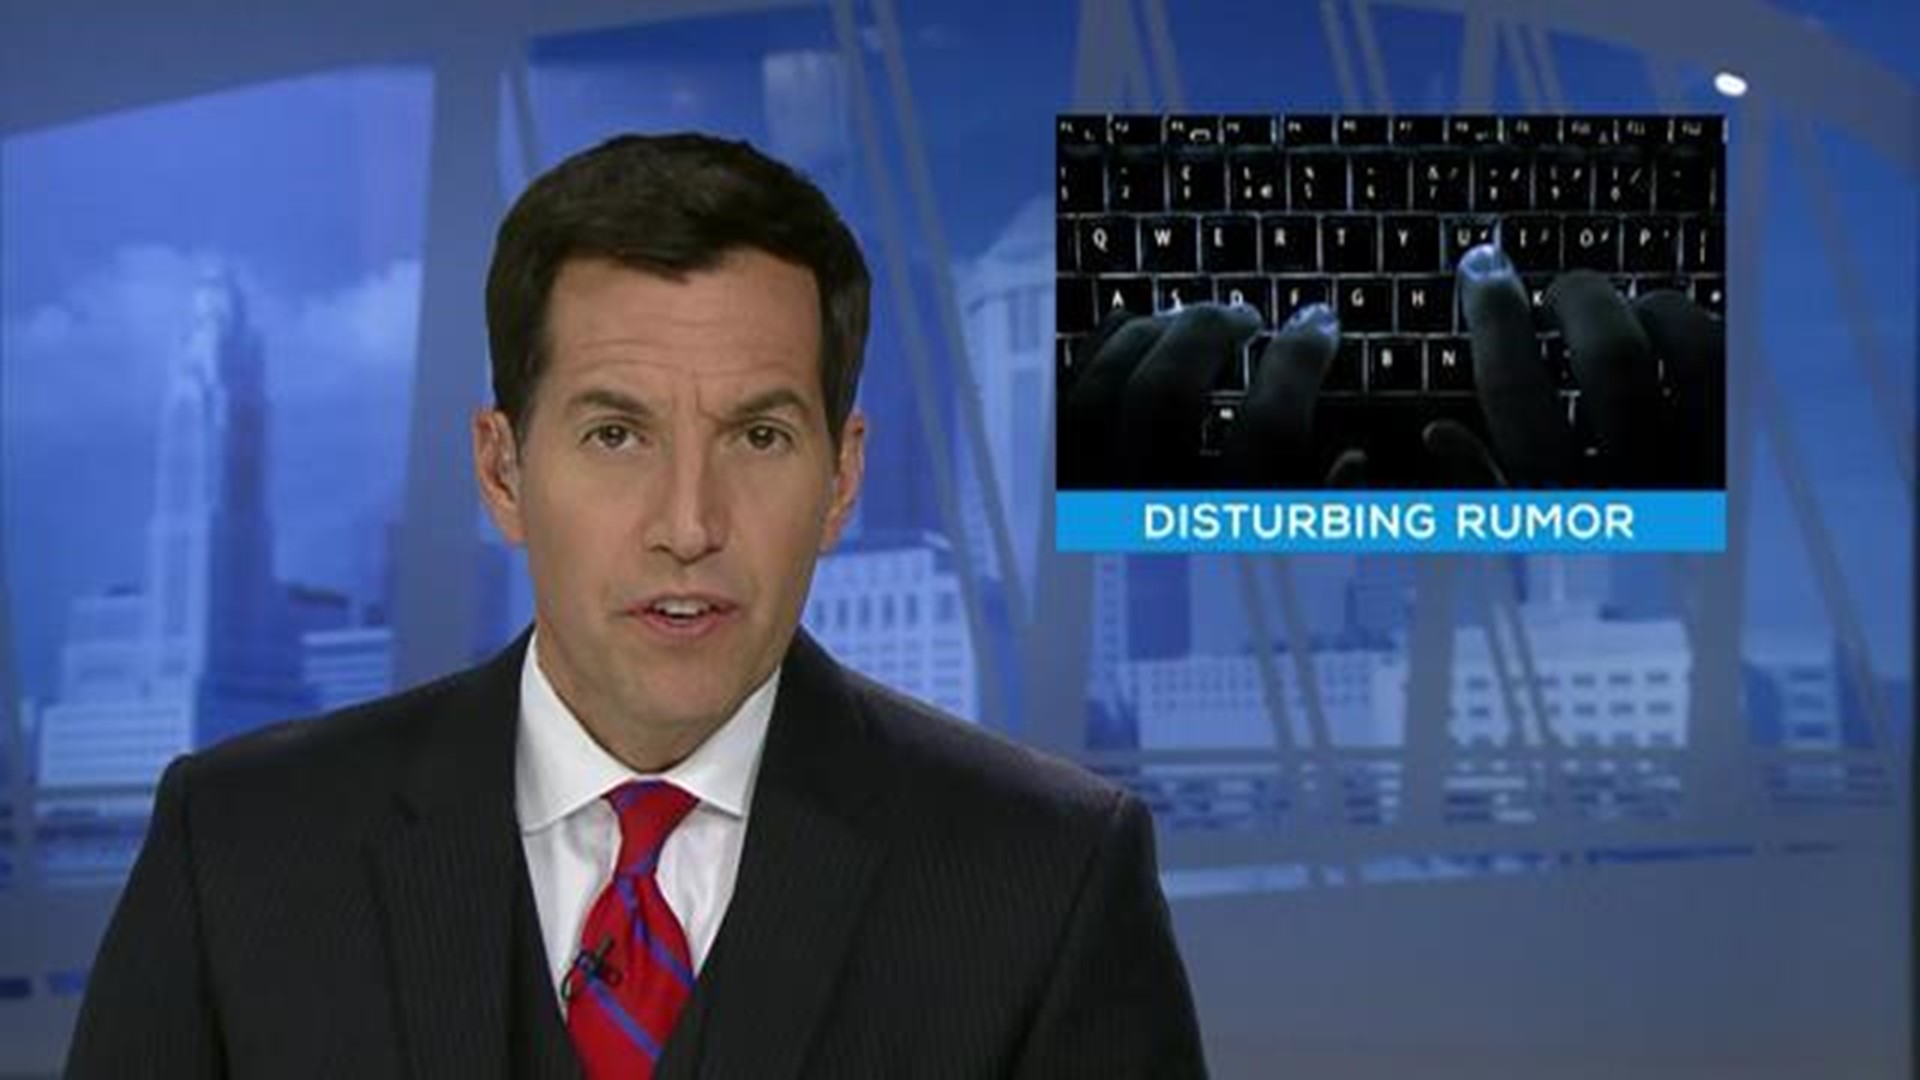 Sex Comvibo - Porn video being shared at central Ohio schools spurring false rumors |  10tv.com